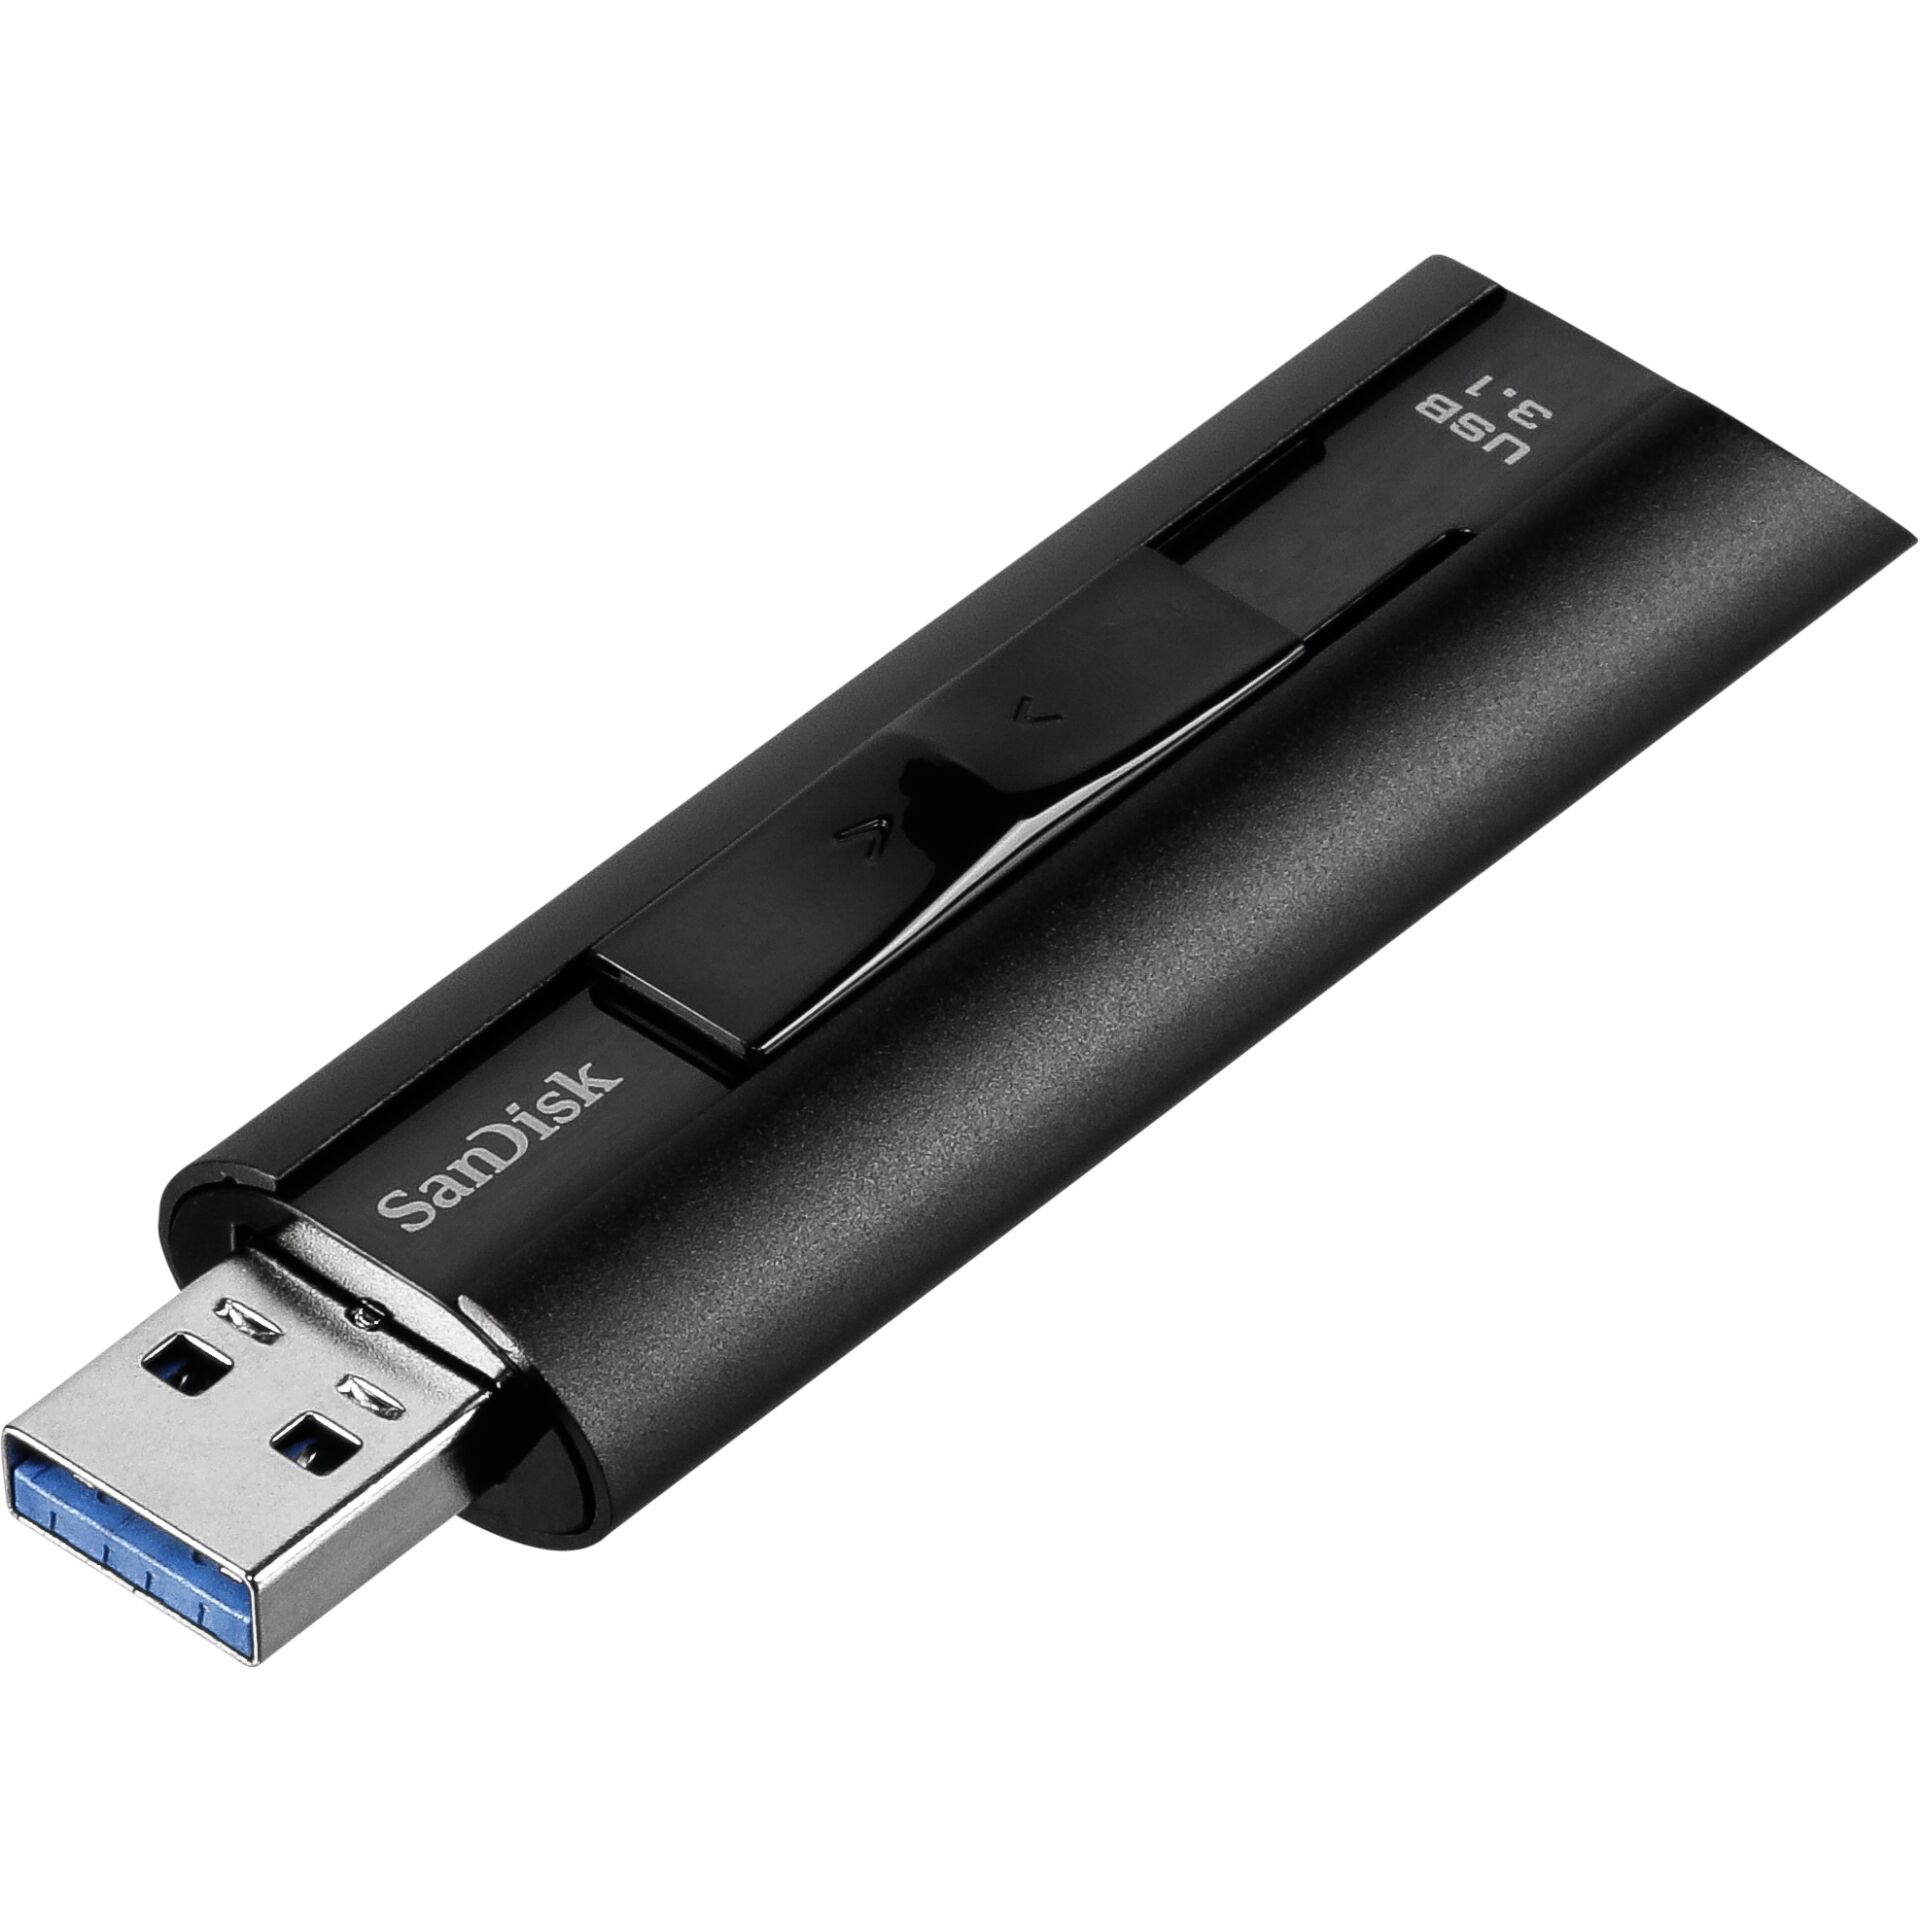 SanDisk Cruzer Extreme PRO 128GB USB 3.1         SDCZ880-128